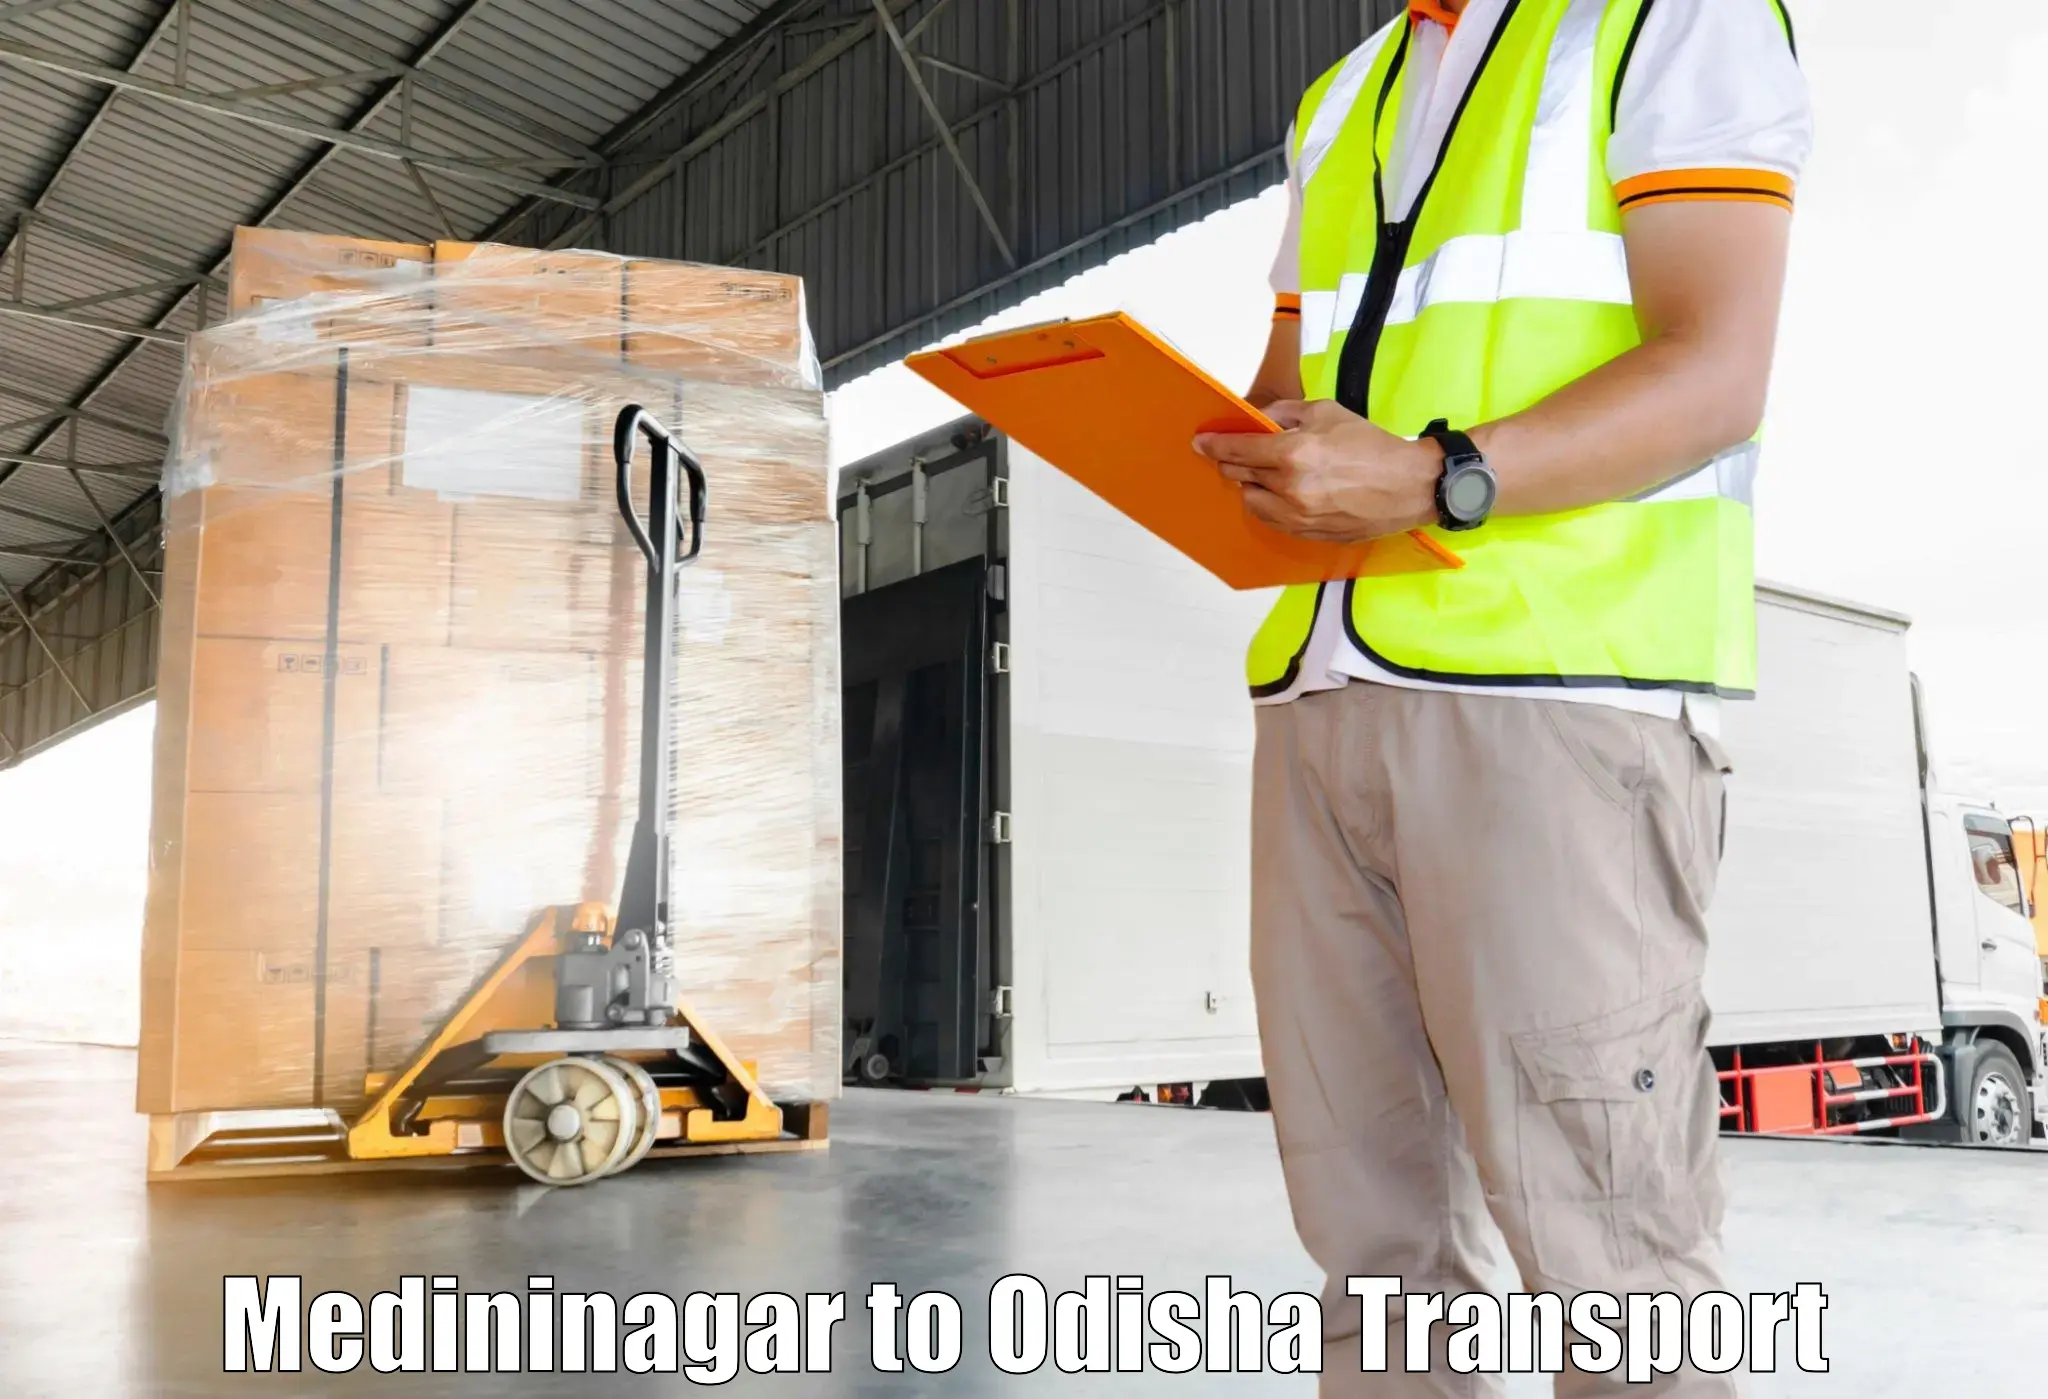 Transport in sharing in Medininagar to Tikiri